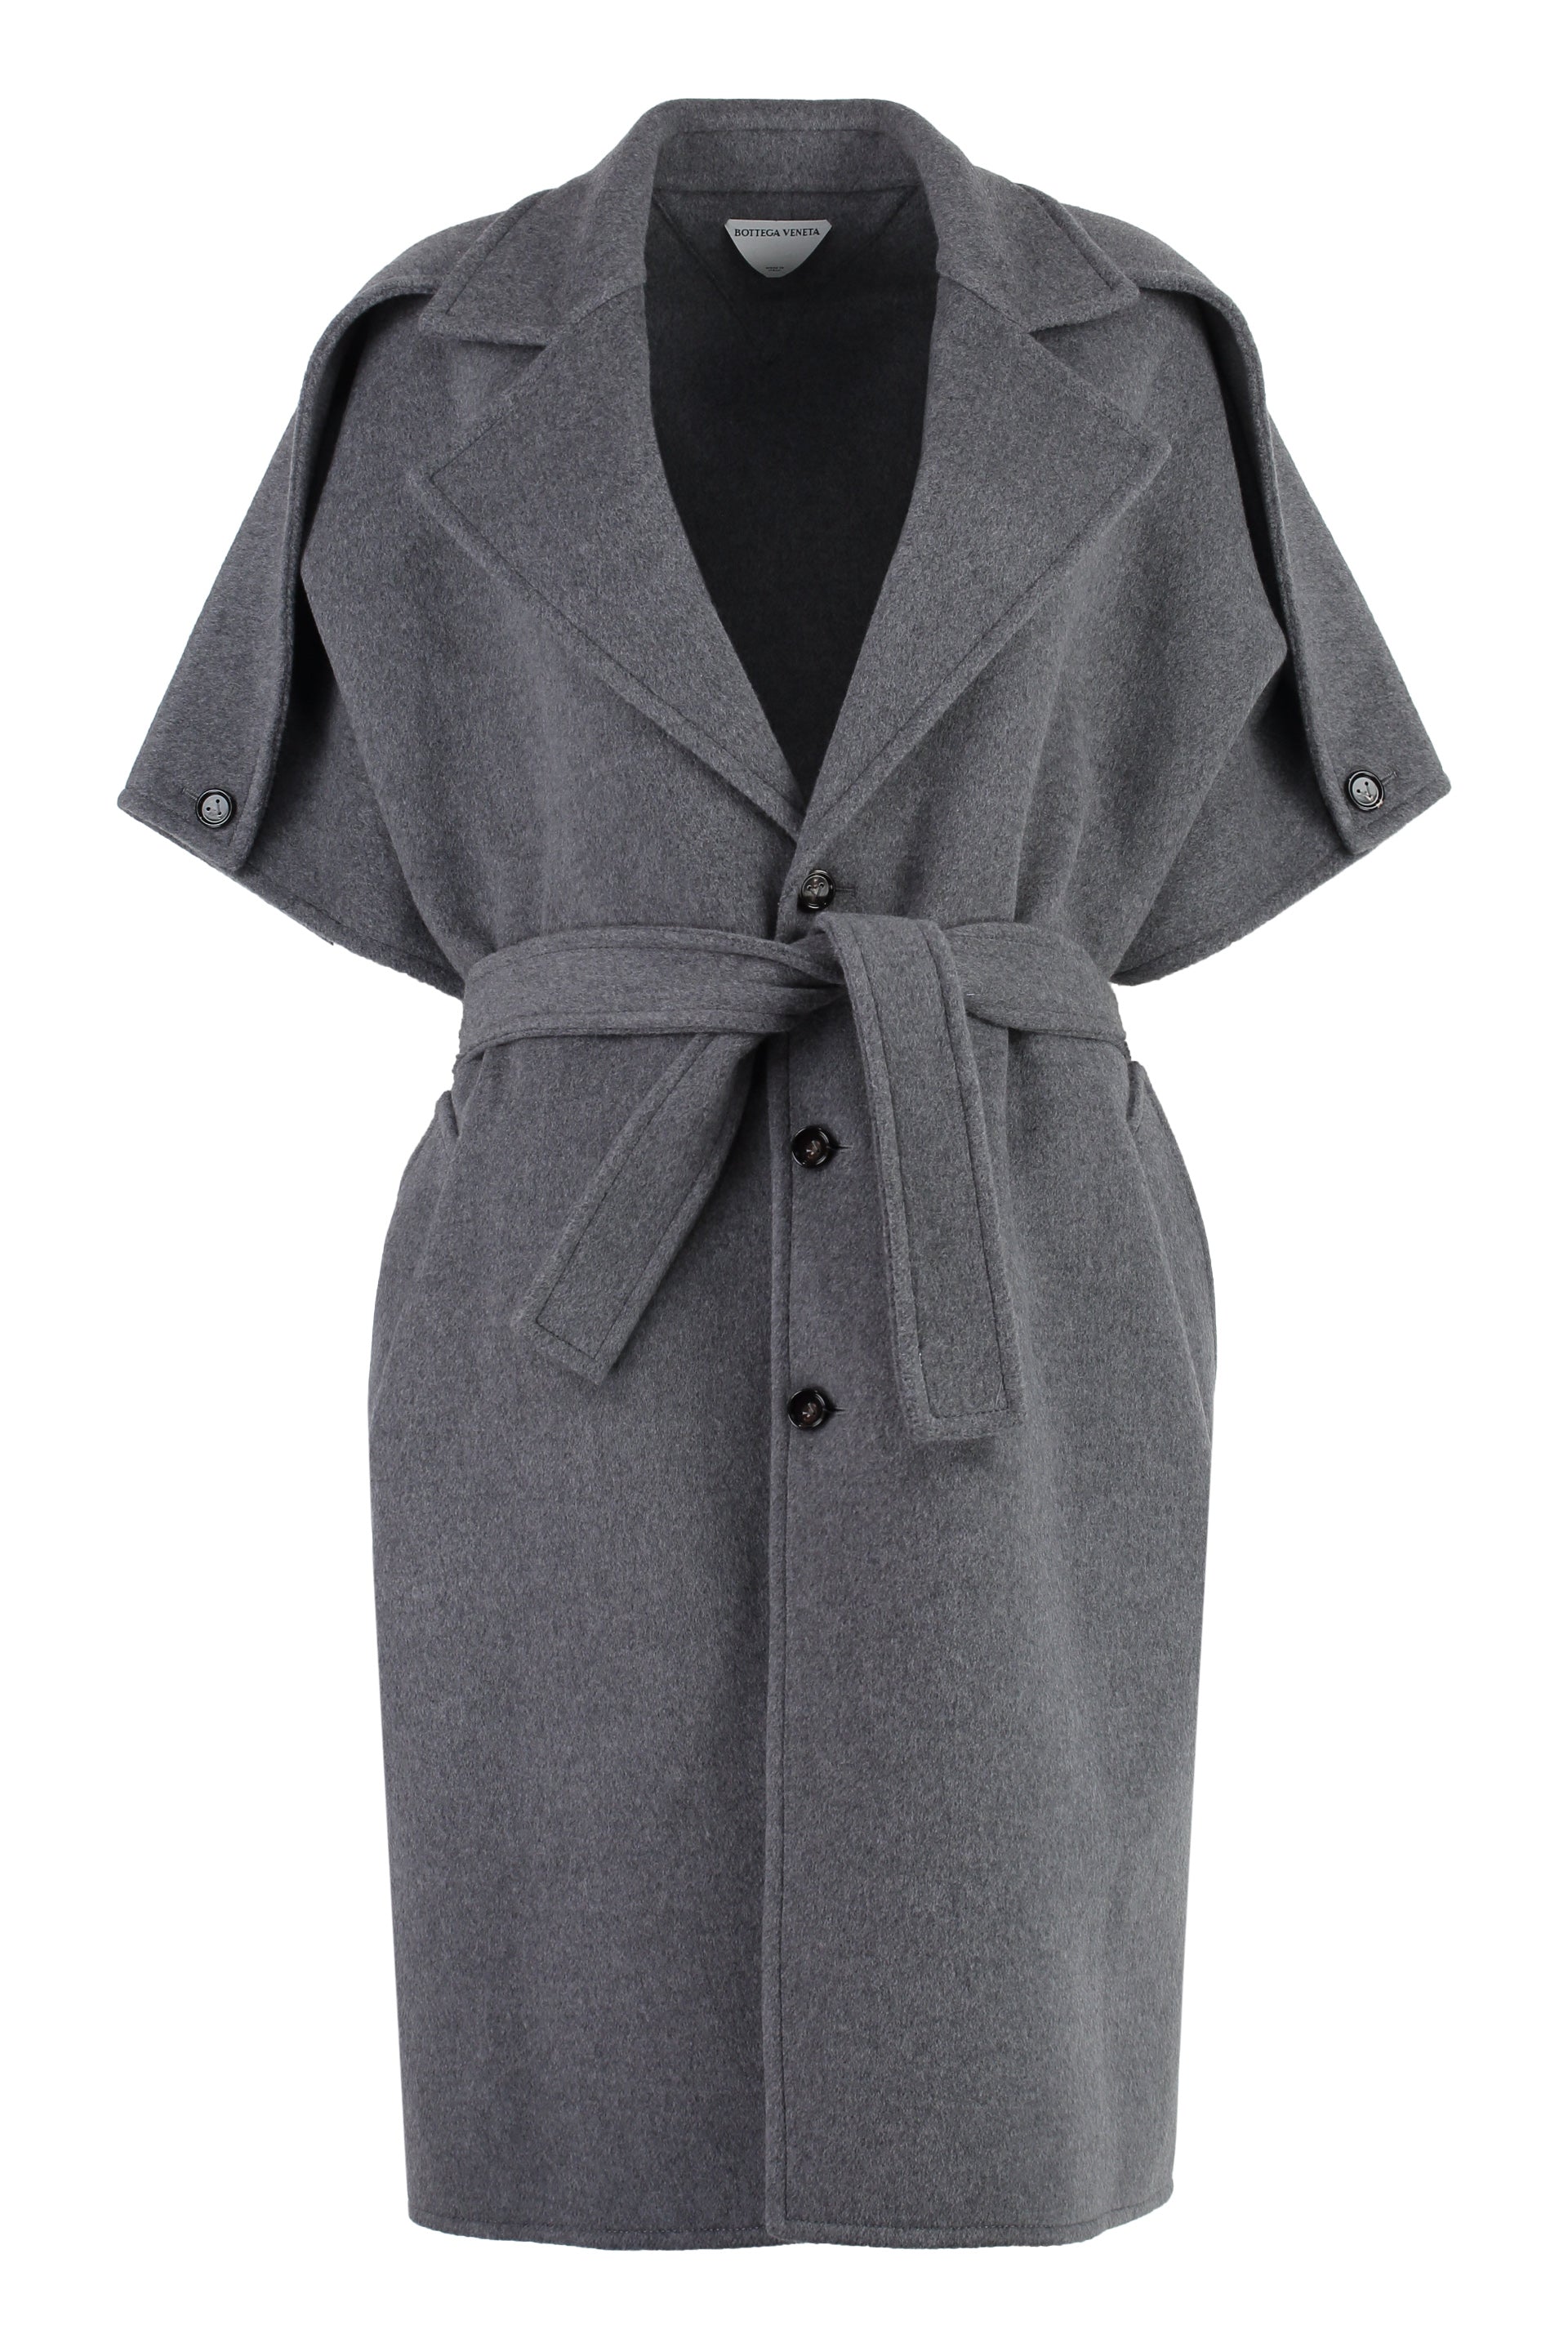 Bottega Veneta Luxurious Wool And Cashmere Jacket For Women – Fw23 In Grey